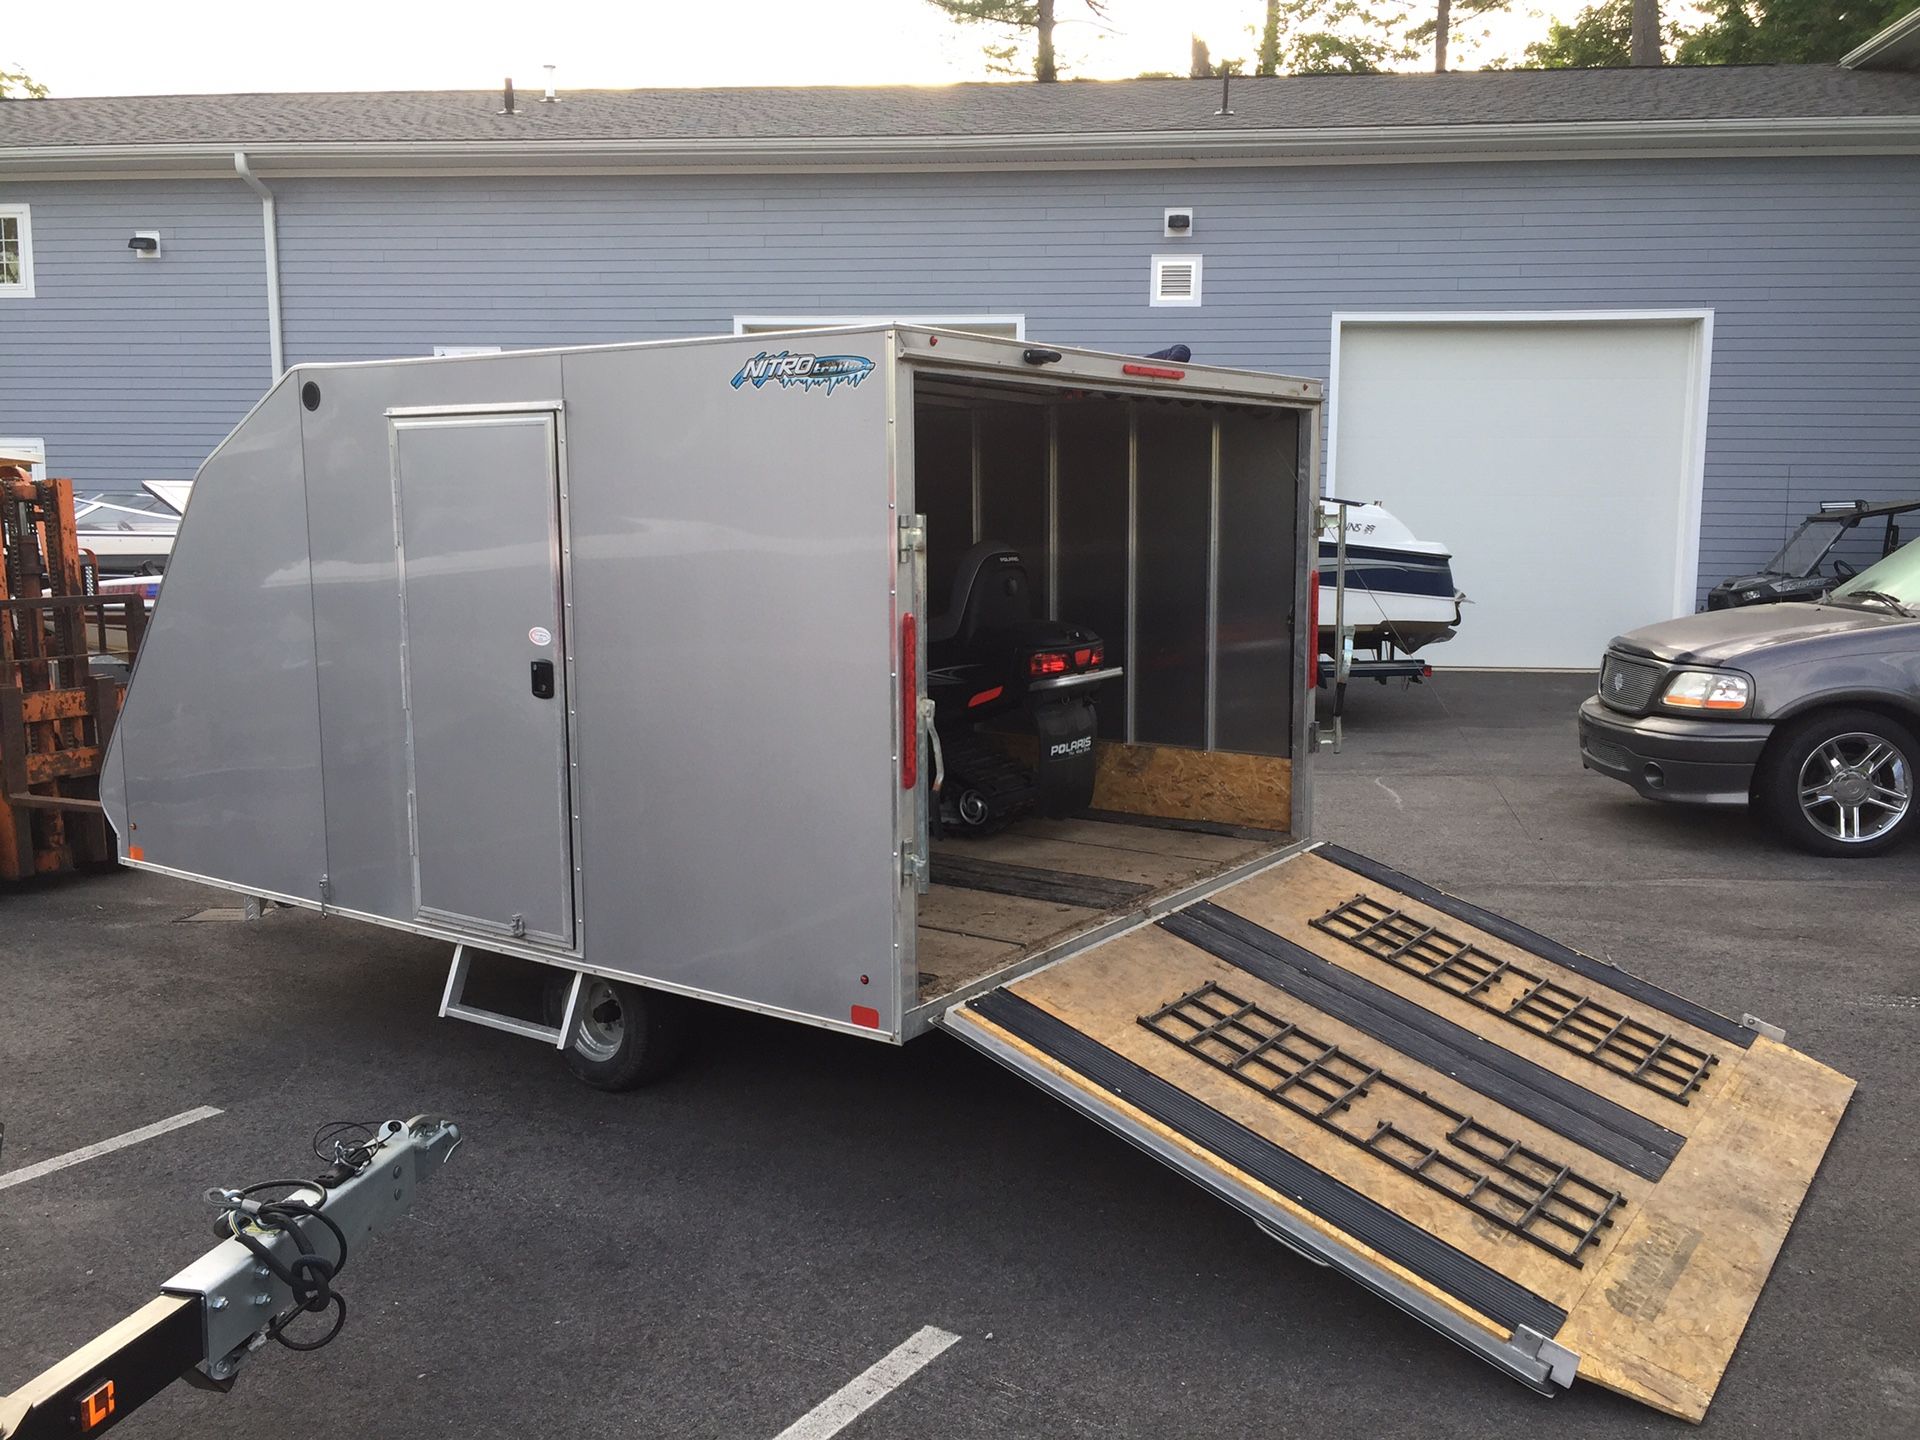 2018 Nitro 12’x101” enclosed hybrid 2 place crossover trailer will trade